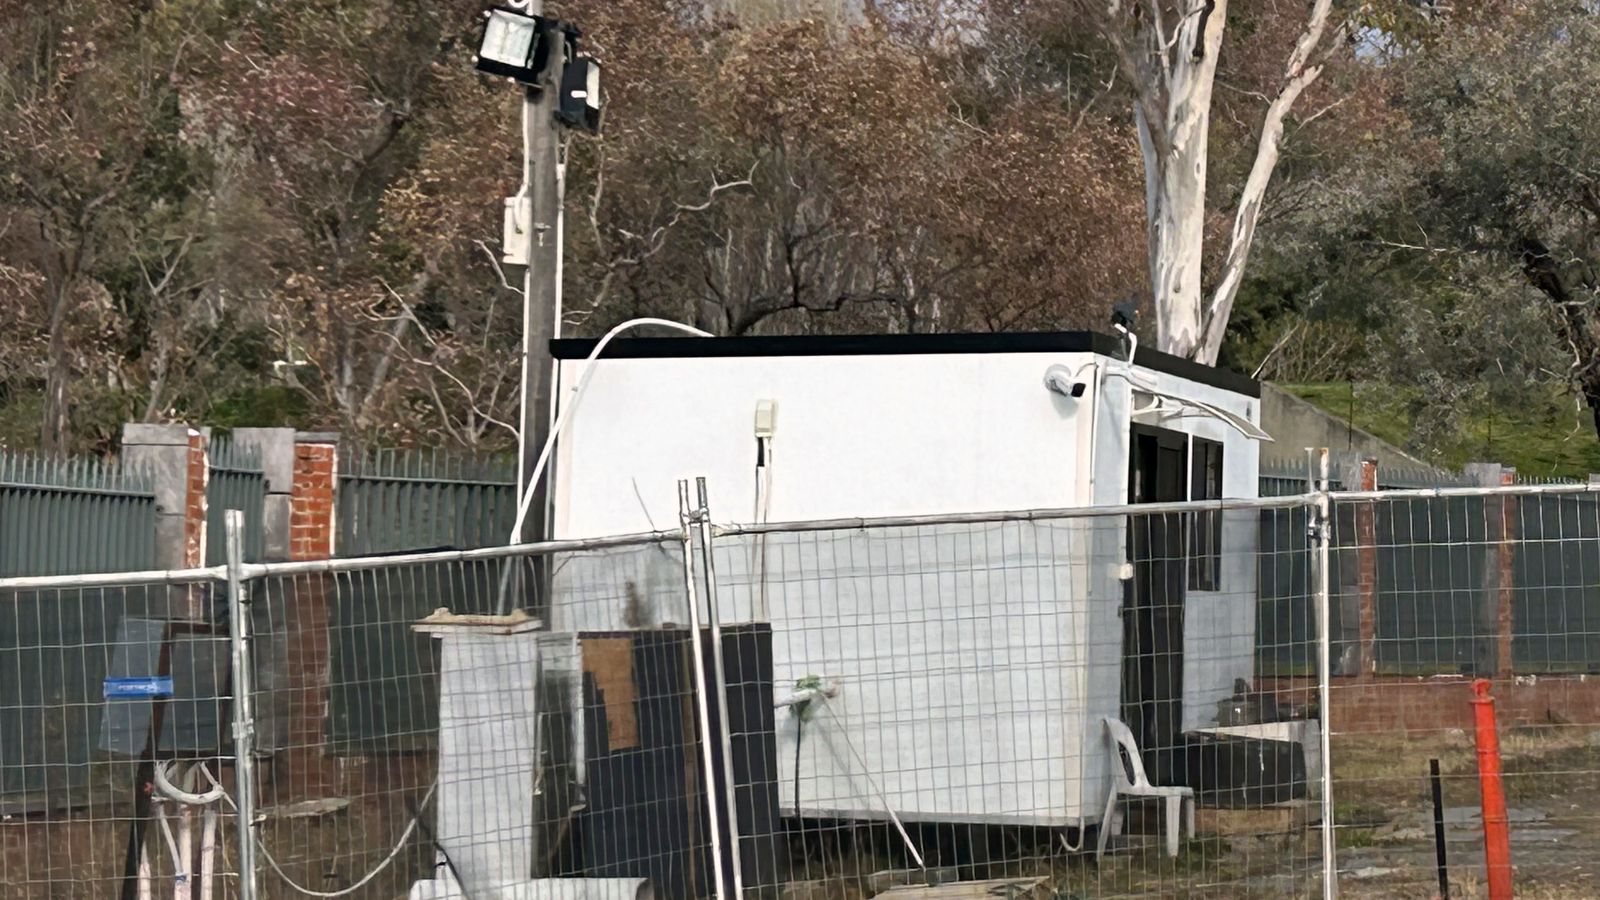 Russian diplomat squatting on axed embassy site near Australia's parliament